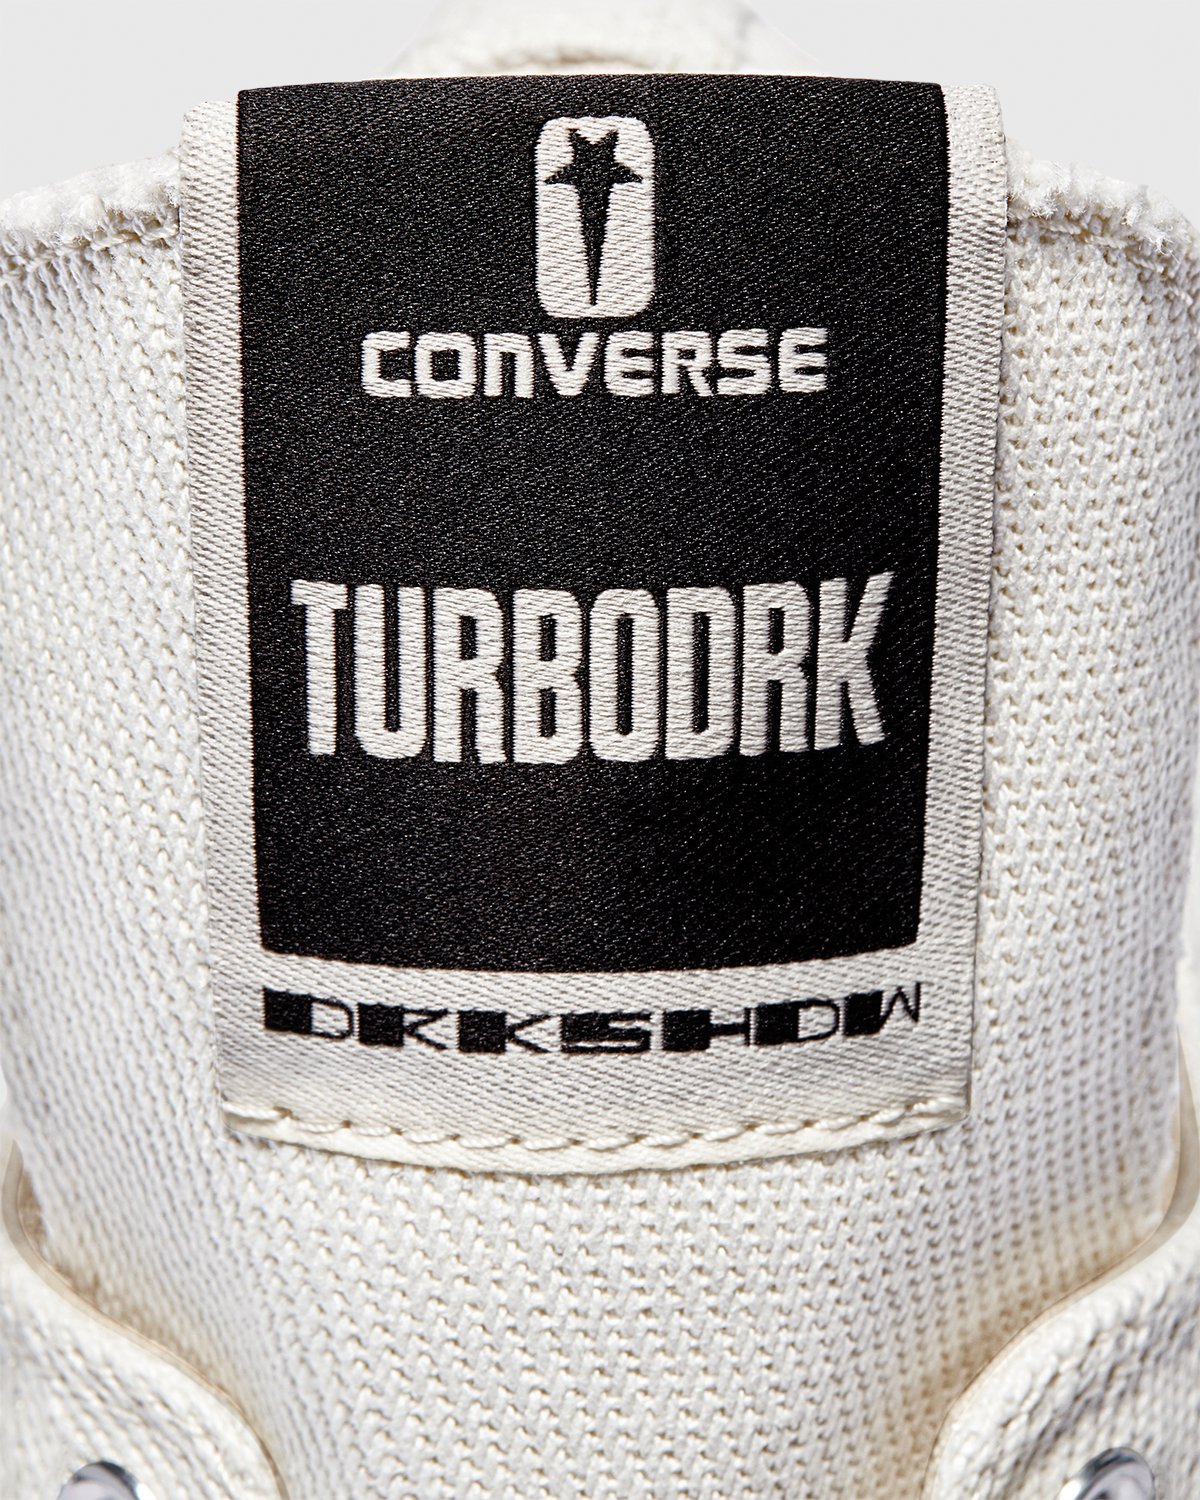 Converse - DRKSHDW TURBODRK Chuck 70 White - Footwear - White - Image 7